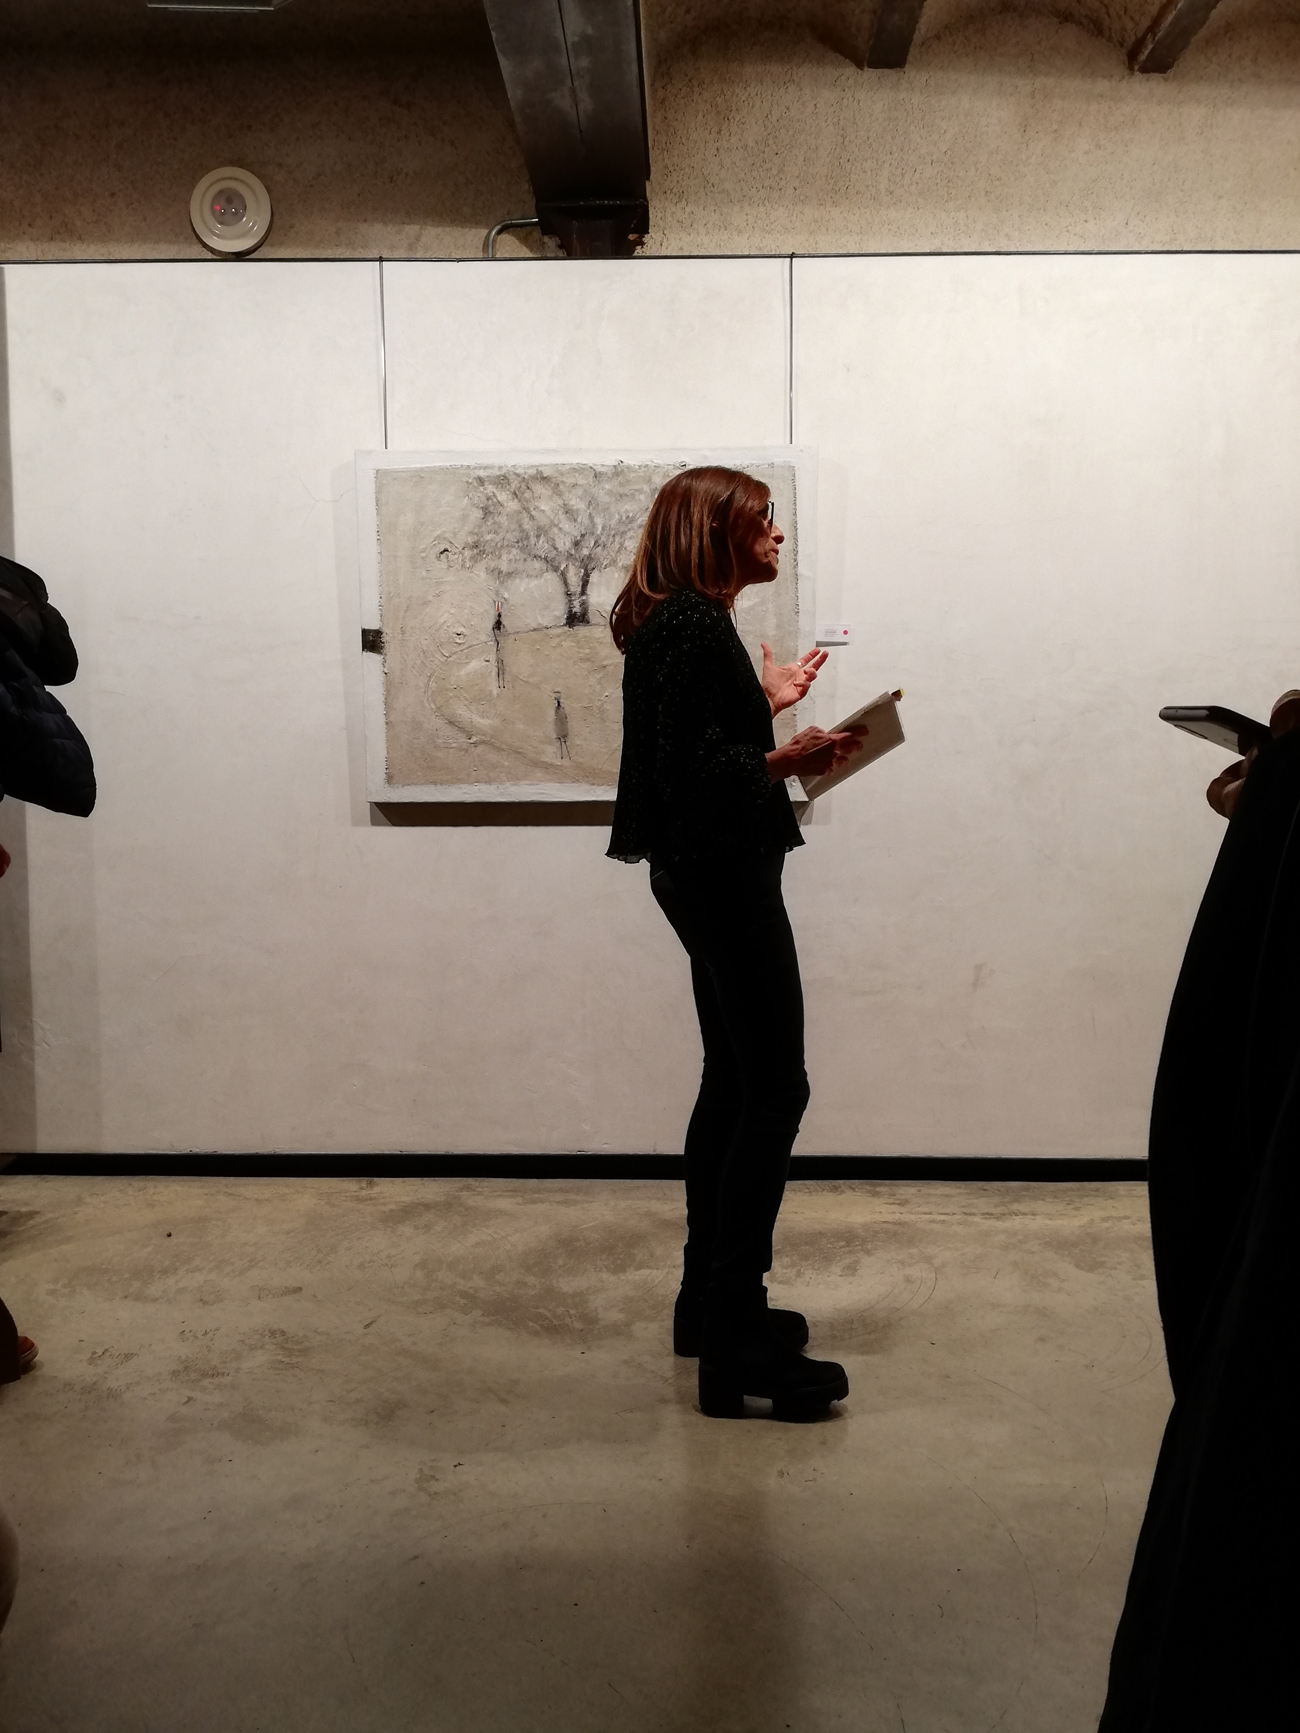 Visita guiada a la exposición "Espais per al silenci" de Marta Ballvé